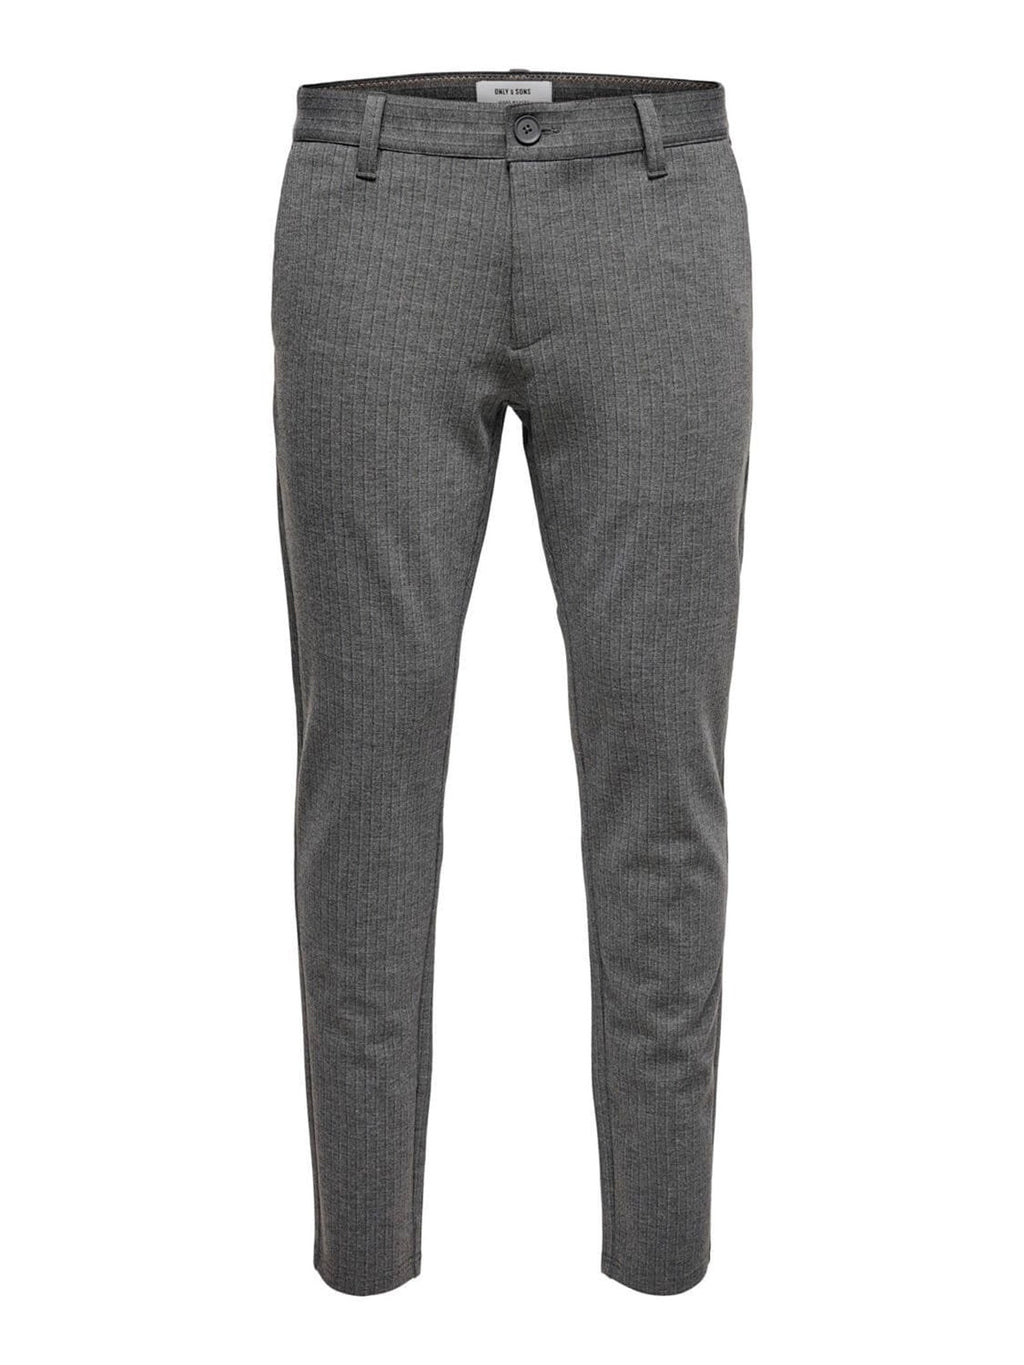 Mark pantalon - gris rayé (pantalon extensible)